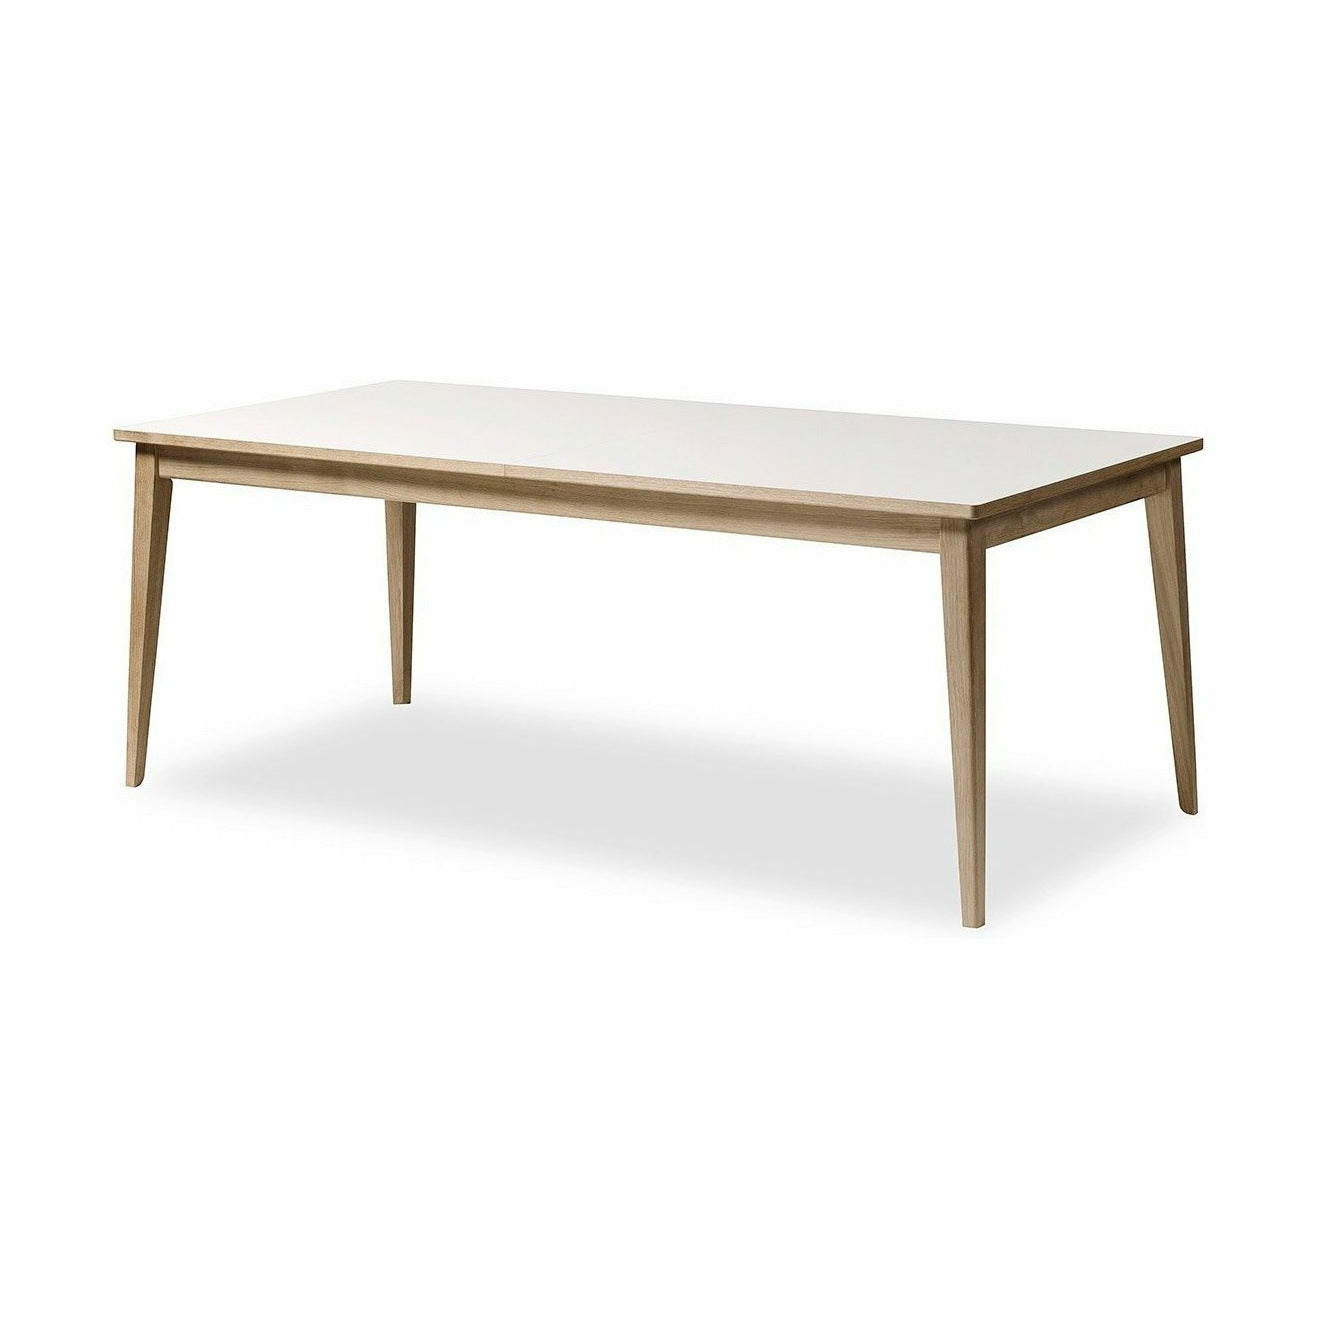 Andersen Furniture T3 Table extensible stratifié blanc, chêne savonned, 200 cm